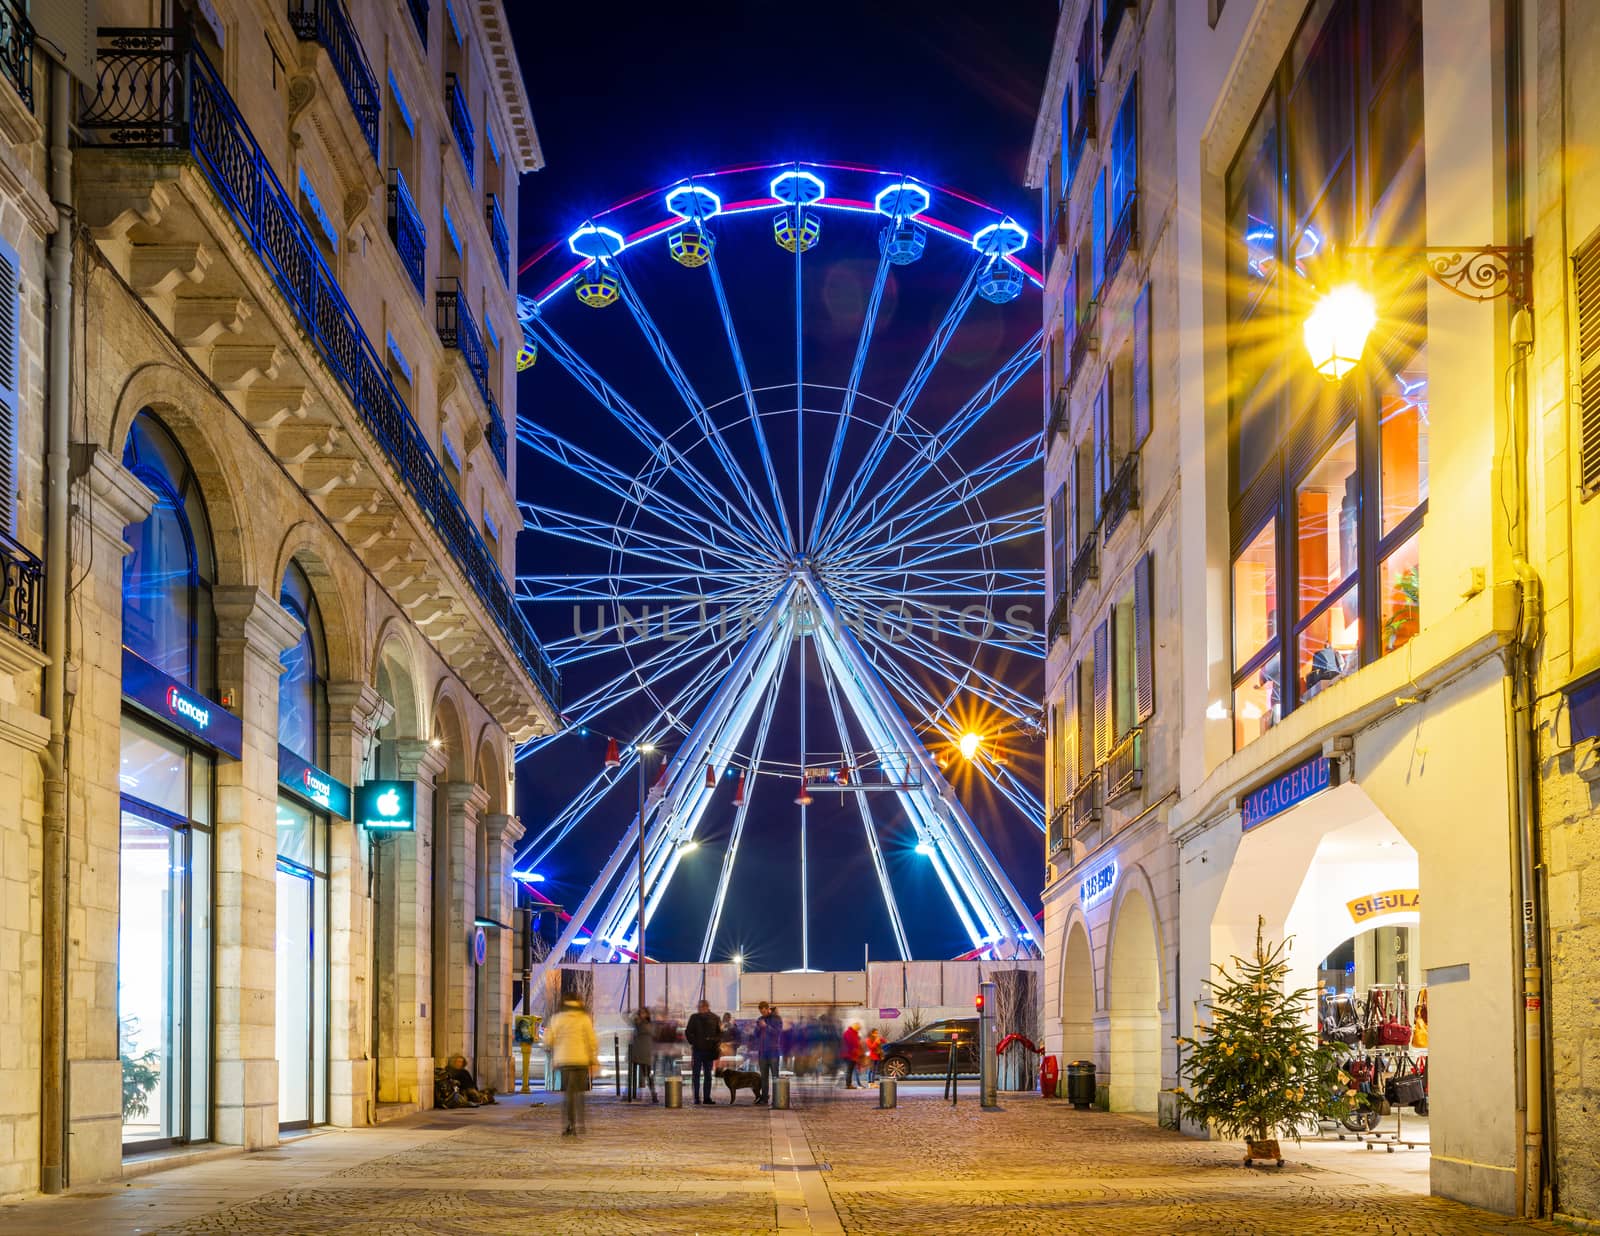 The ferris wheel at night in Bayonne, France by dutourdumonde